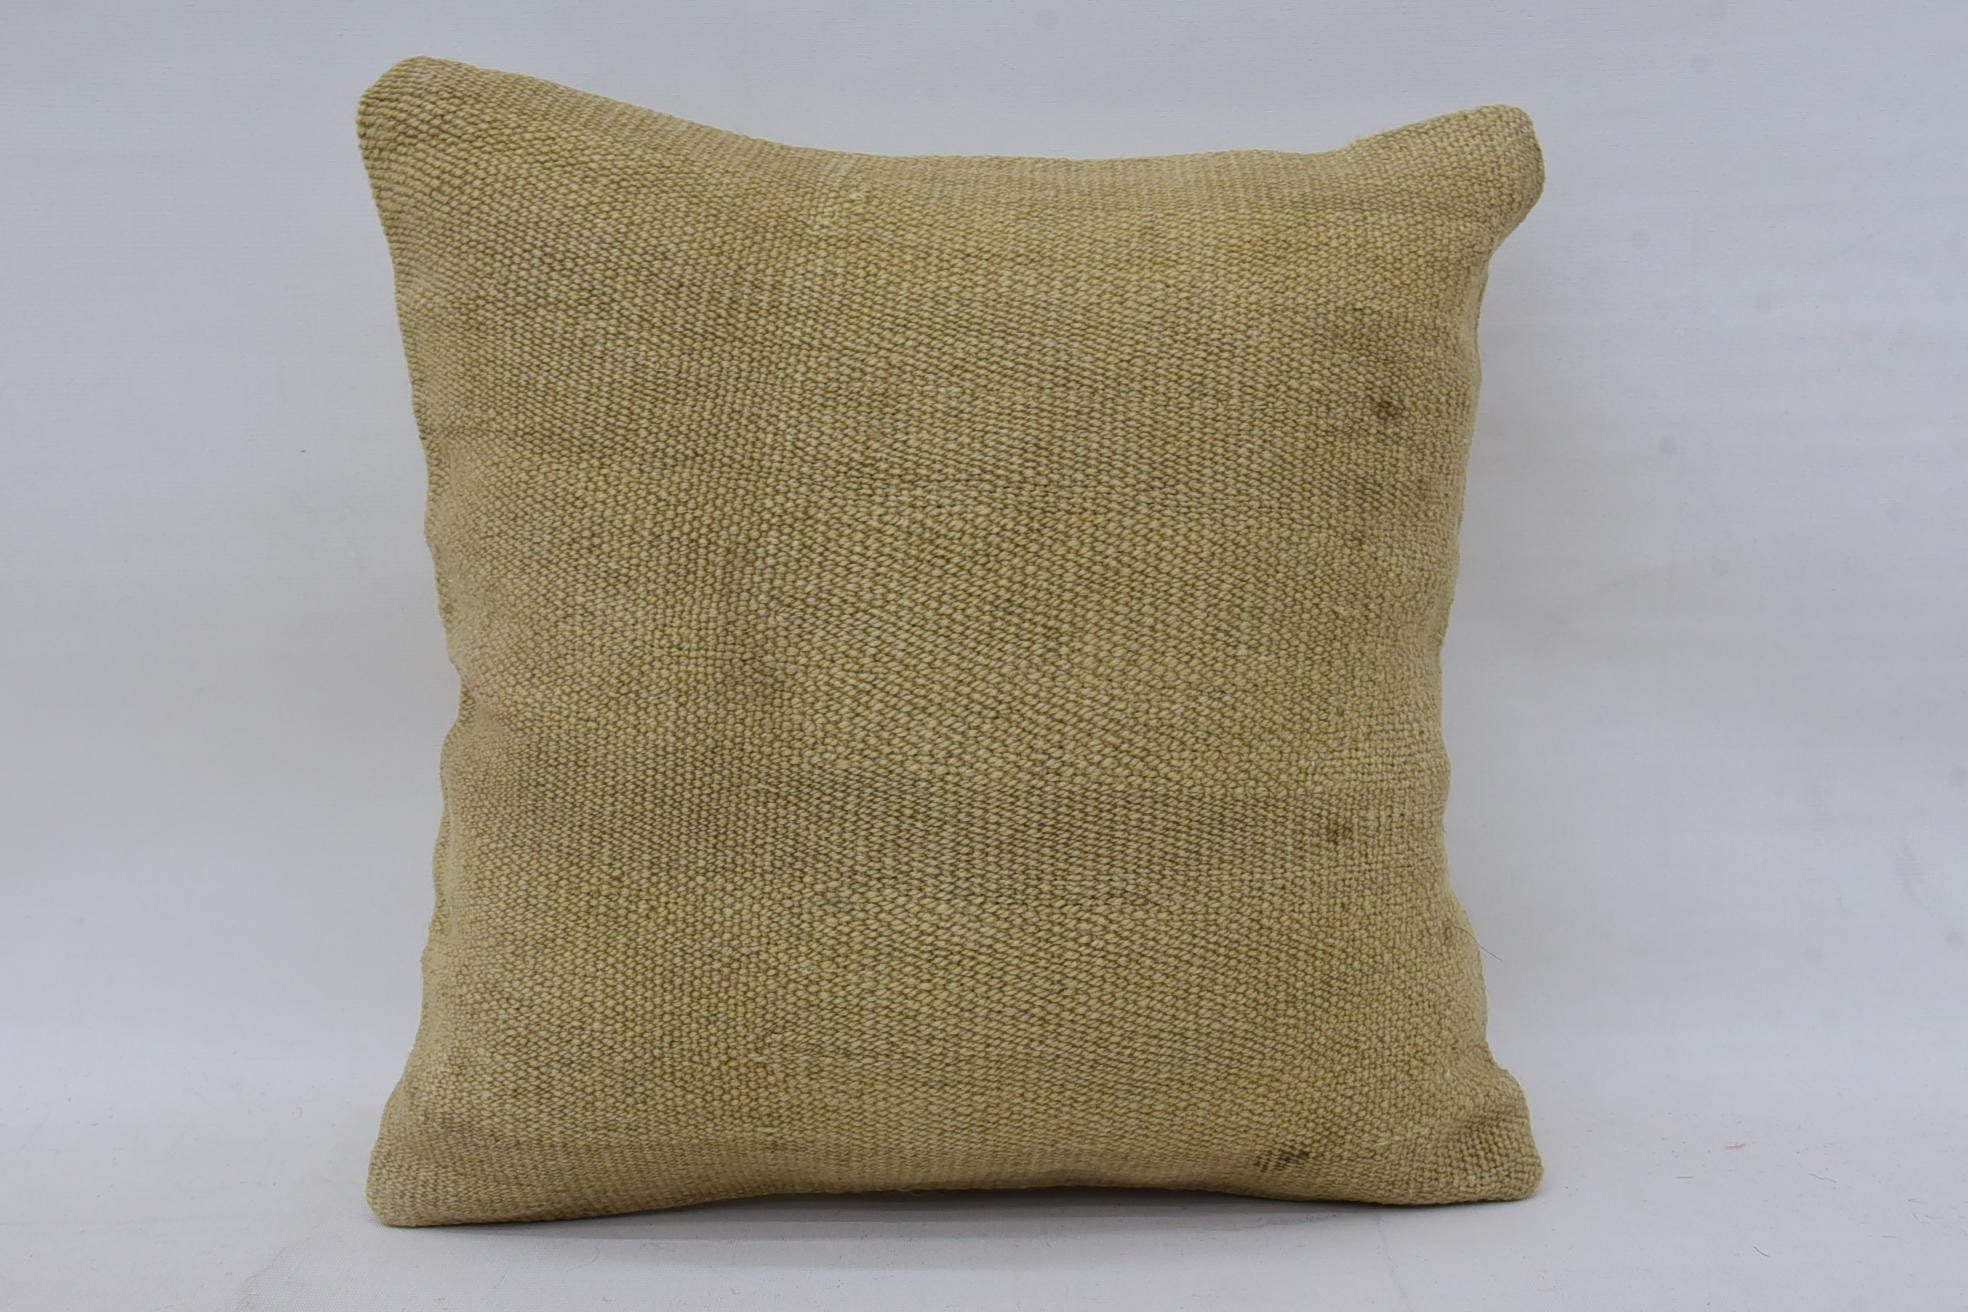 Home Decor Pillow, Cozy Throw Pillow Case, Pillow for Couch, Vintage Kilim Throw Pillow, 14"x14" Beige Pillow Case, Ottoman Cushion Cover